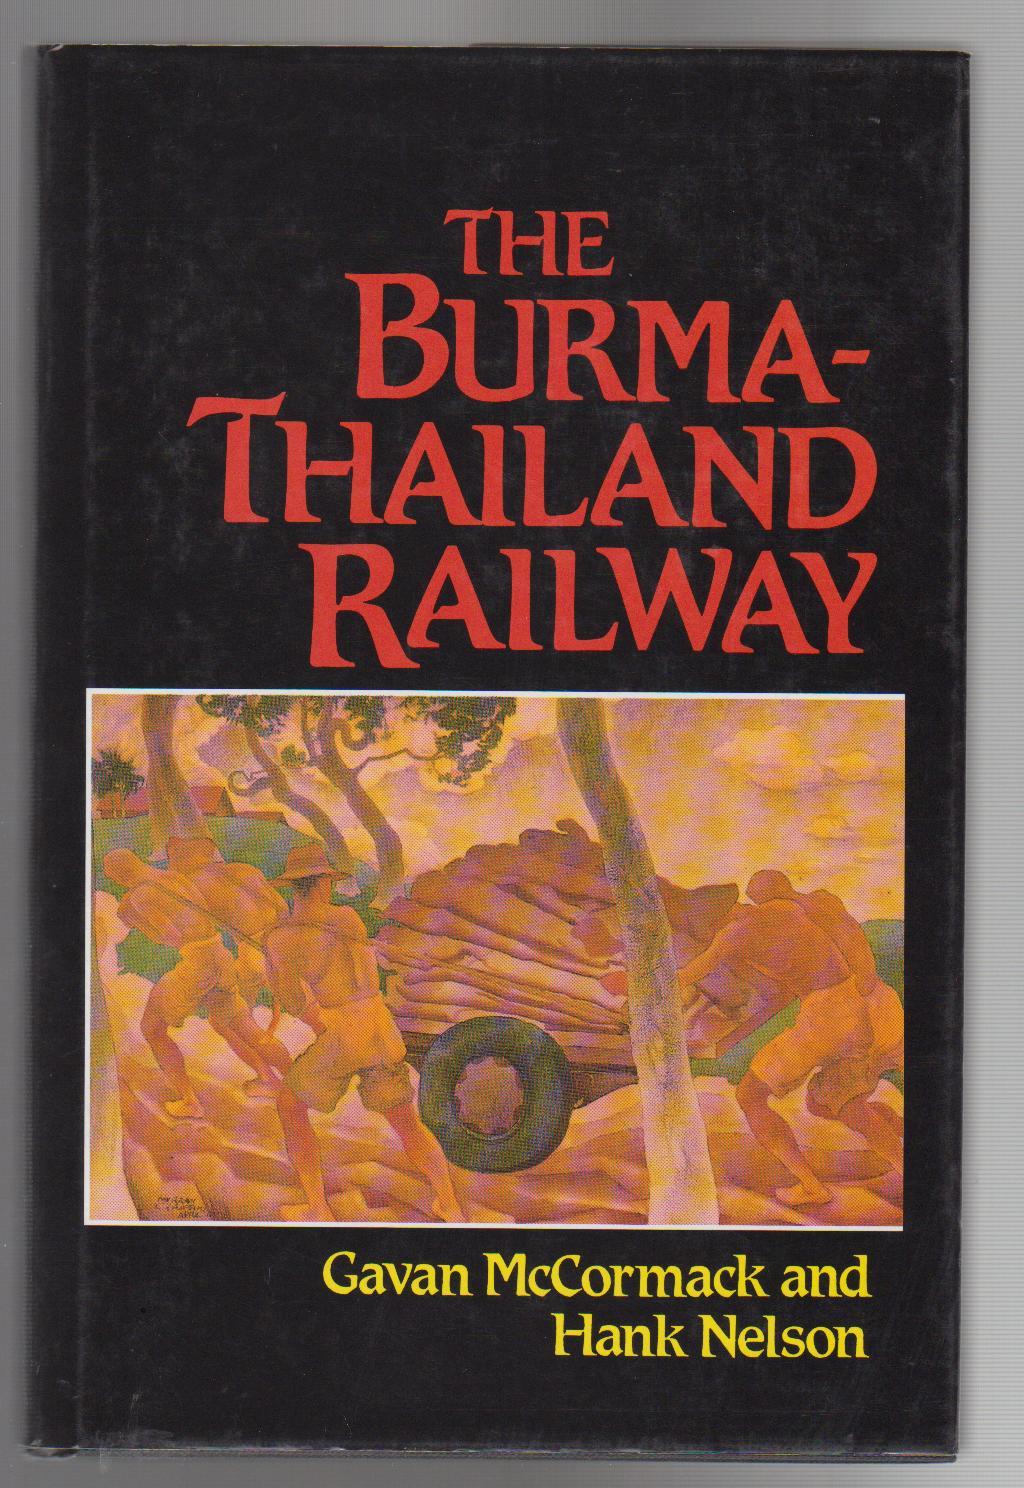 THE BURMA-THAILAND RAILWAY: Memory and History - McCormack, Gavin and Hank Nelson (Editors)